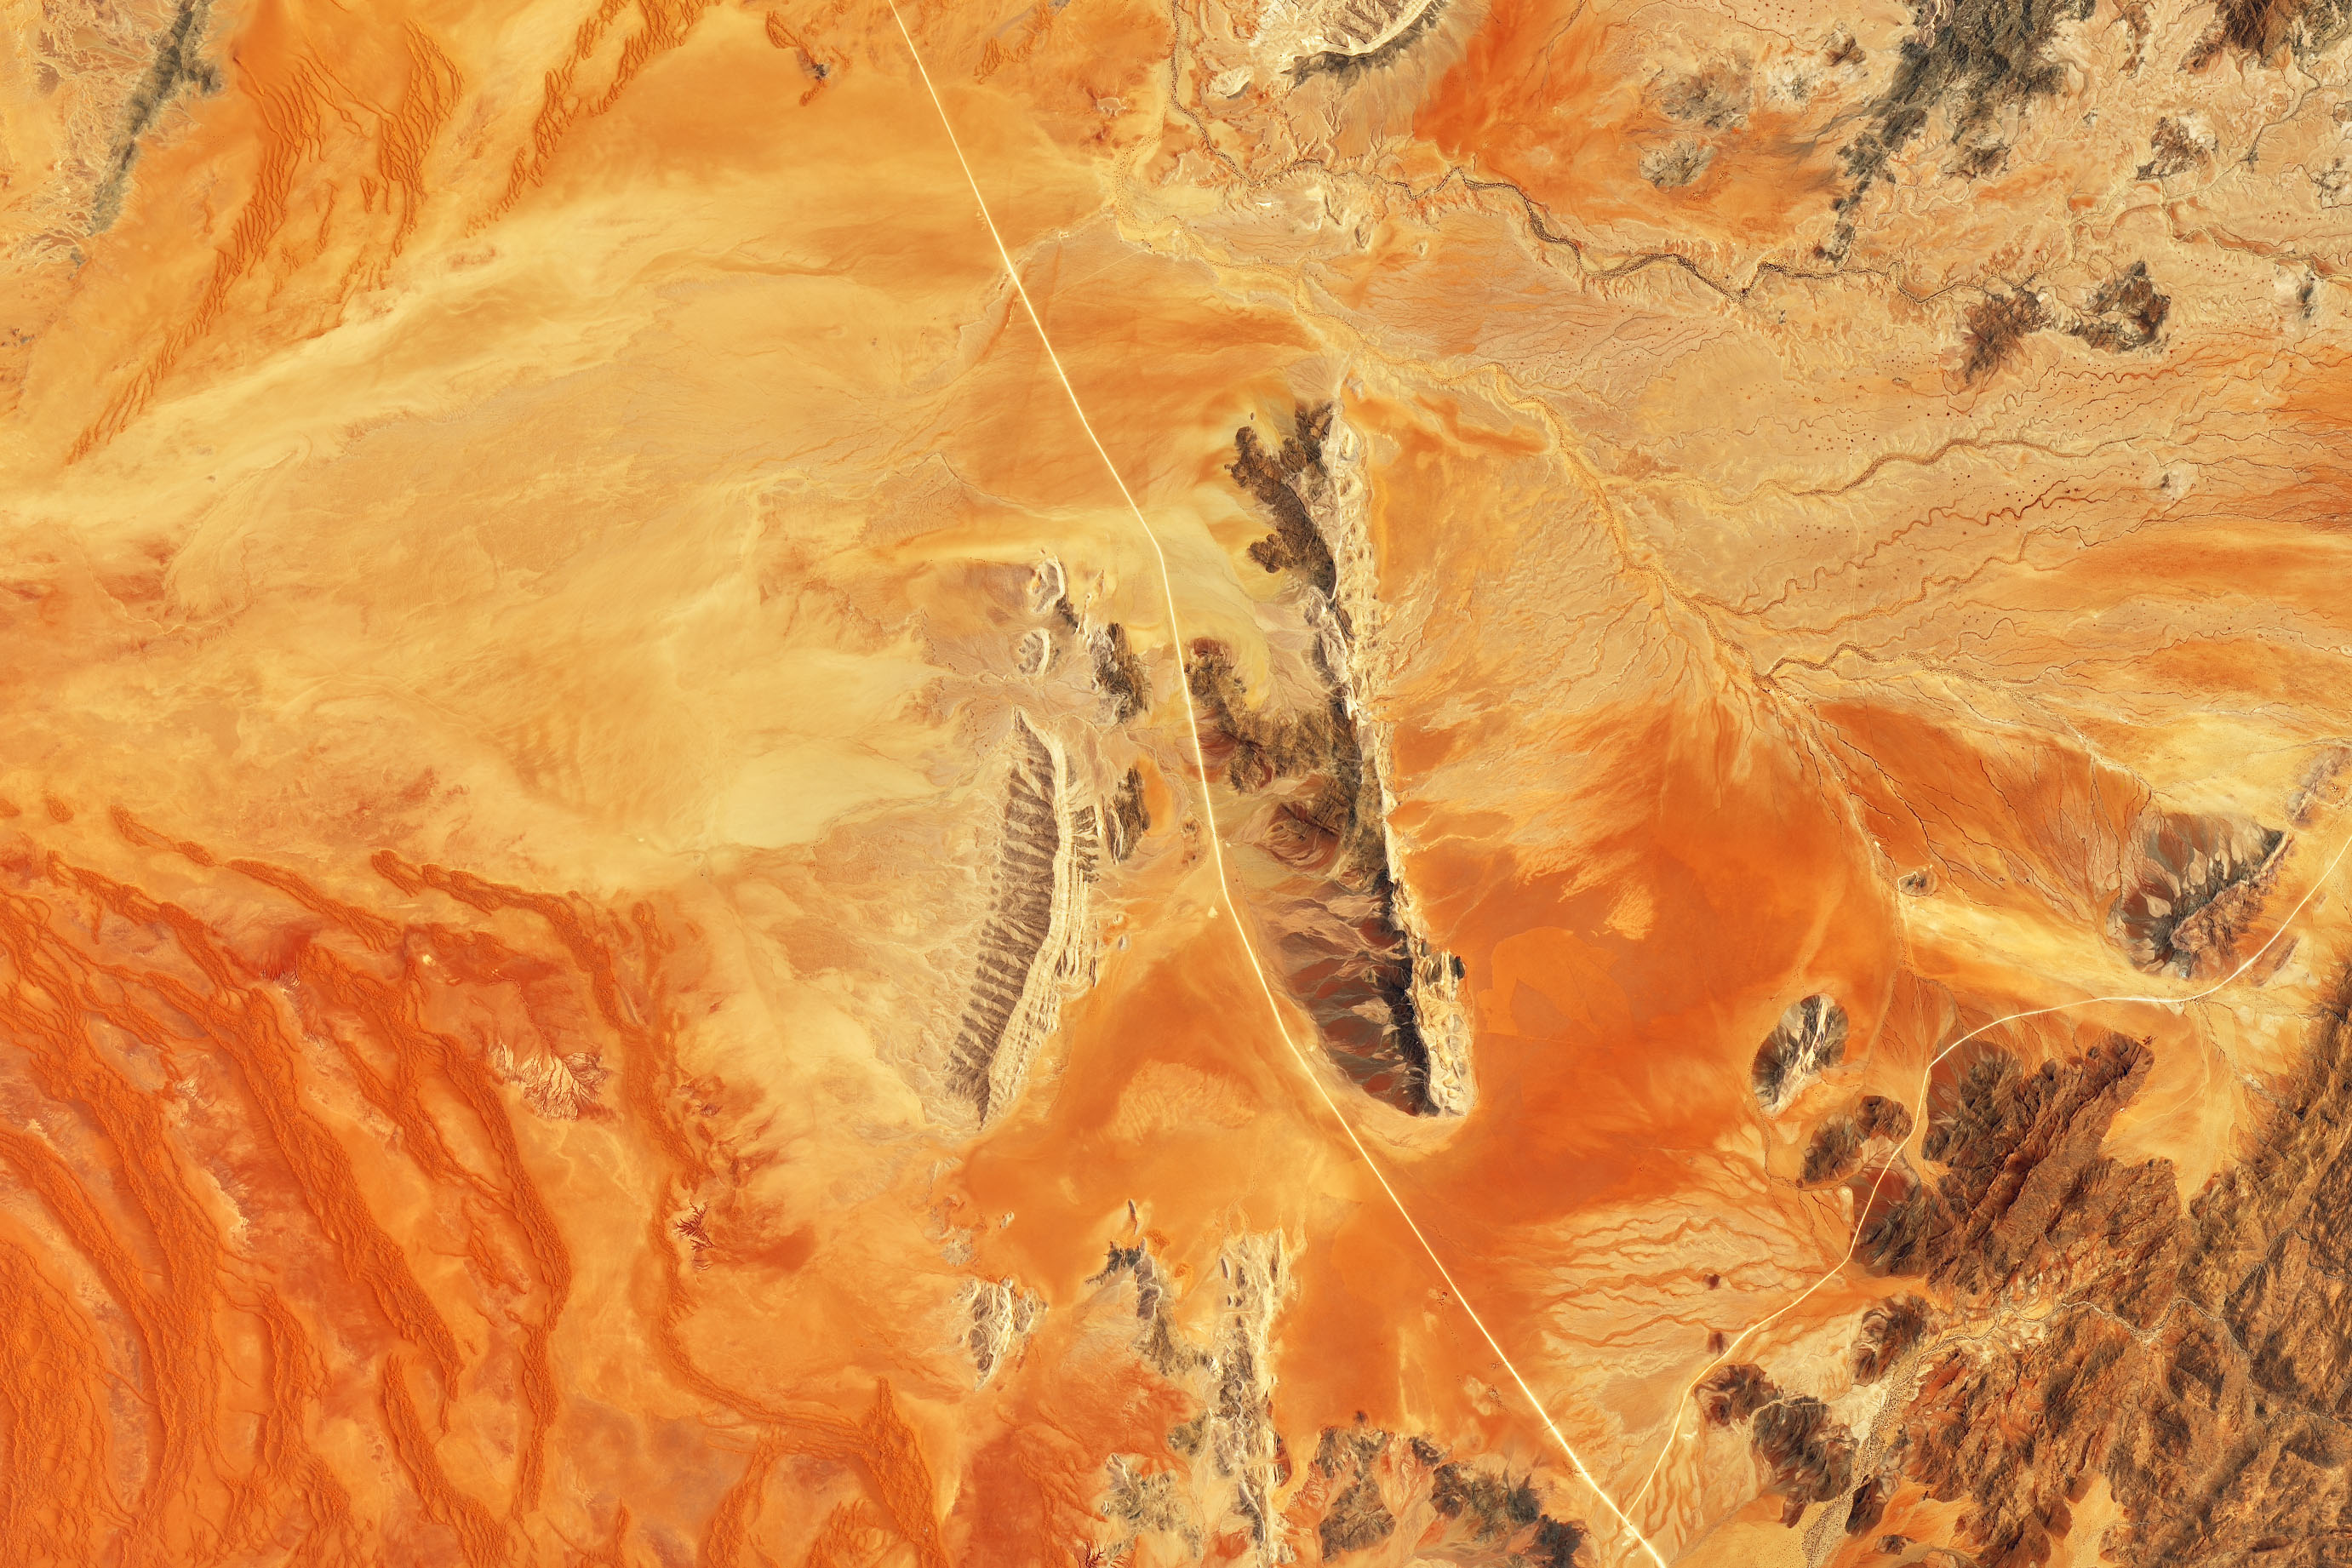 Great Wall Of Namib Wallpapers